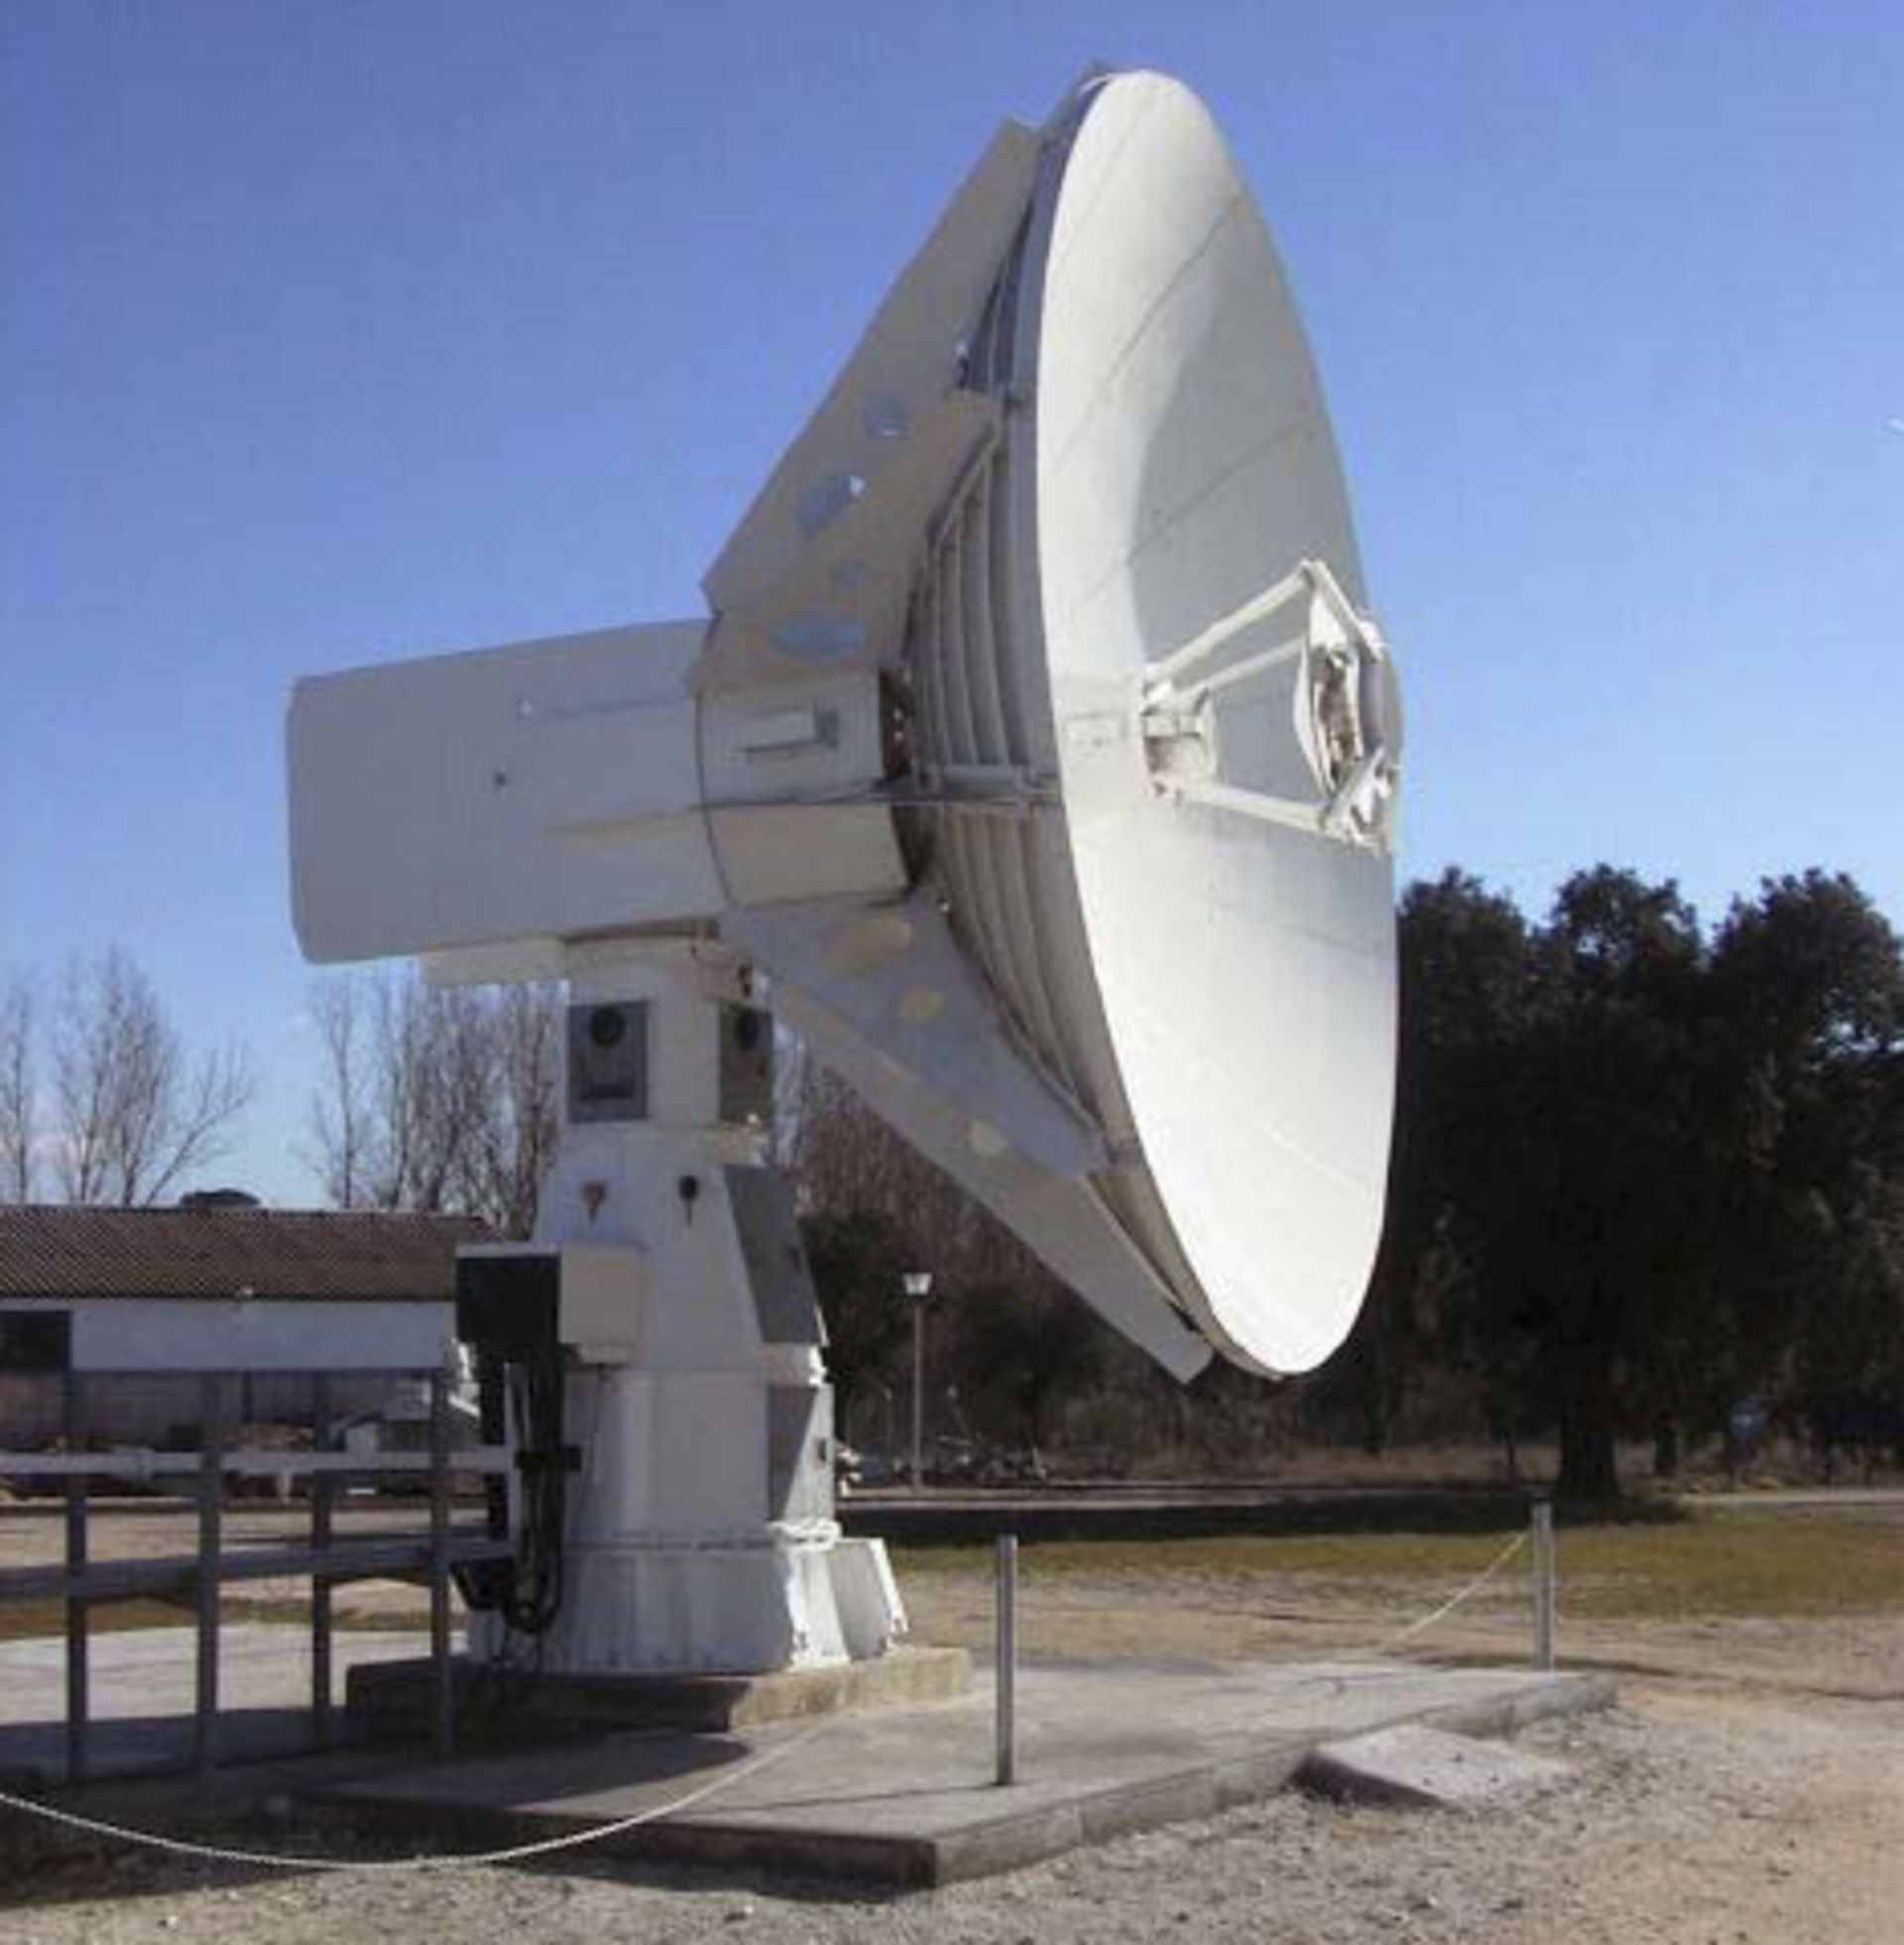 ESTRACK's portable satellite terminal TS-1